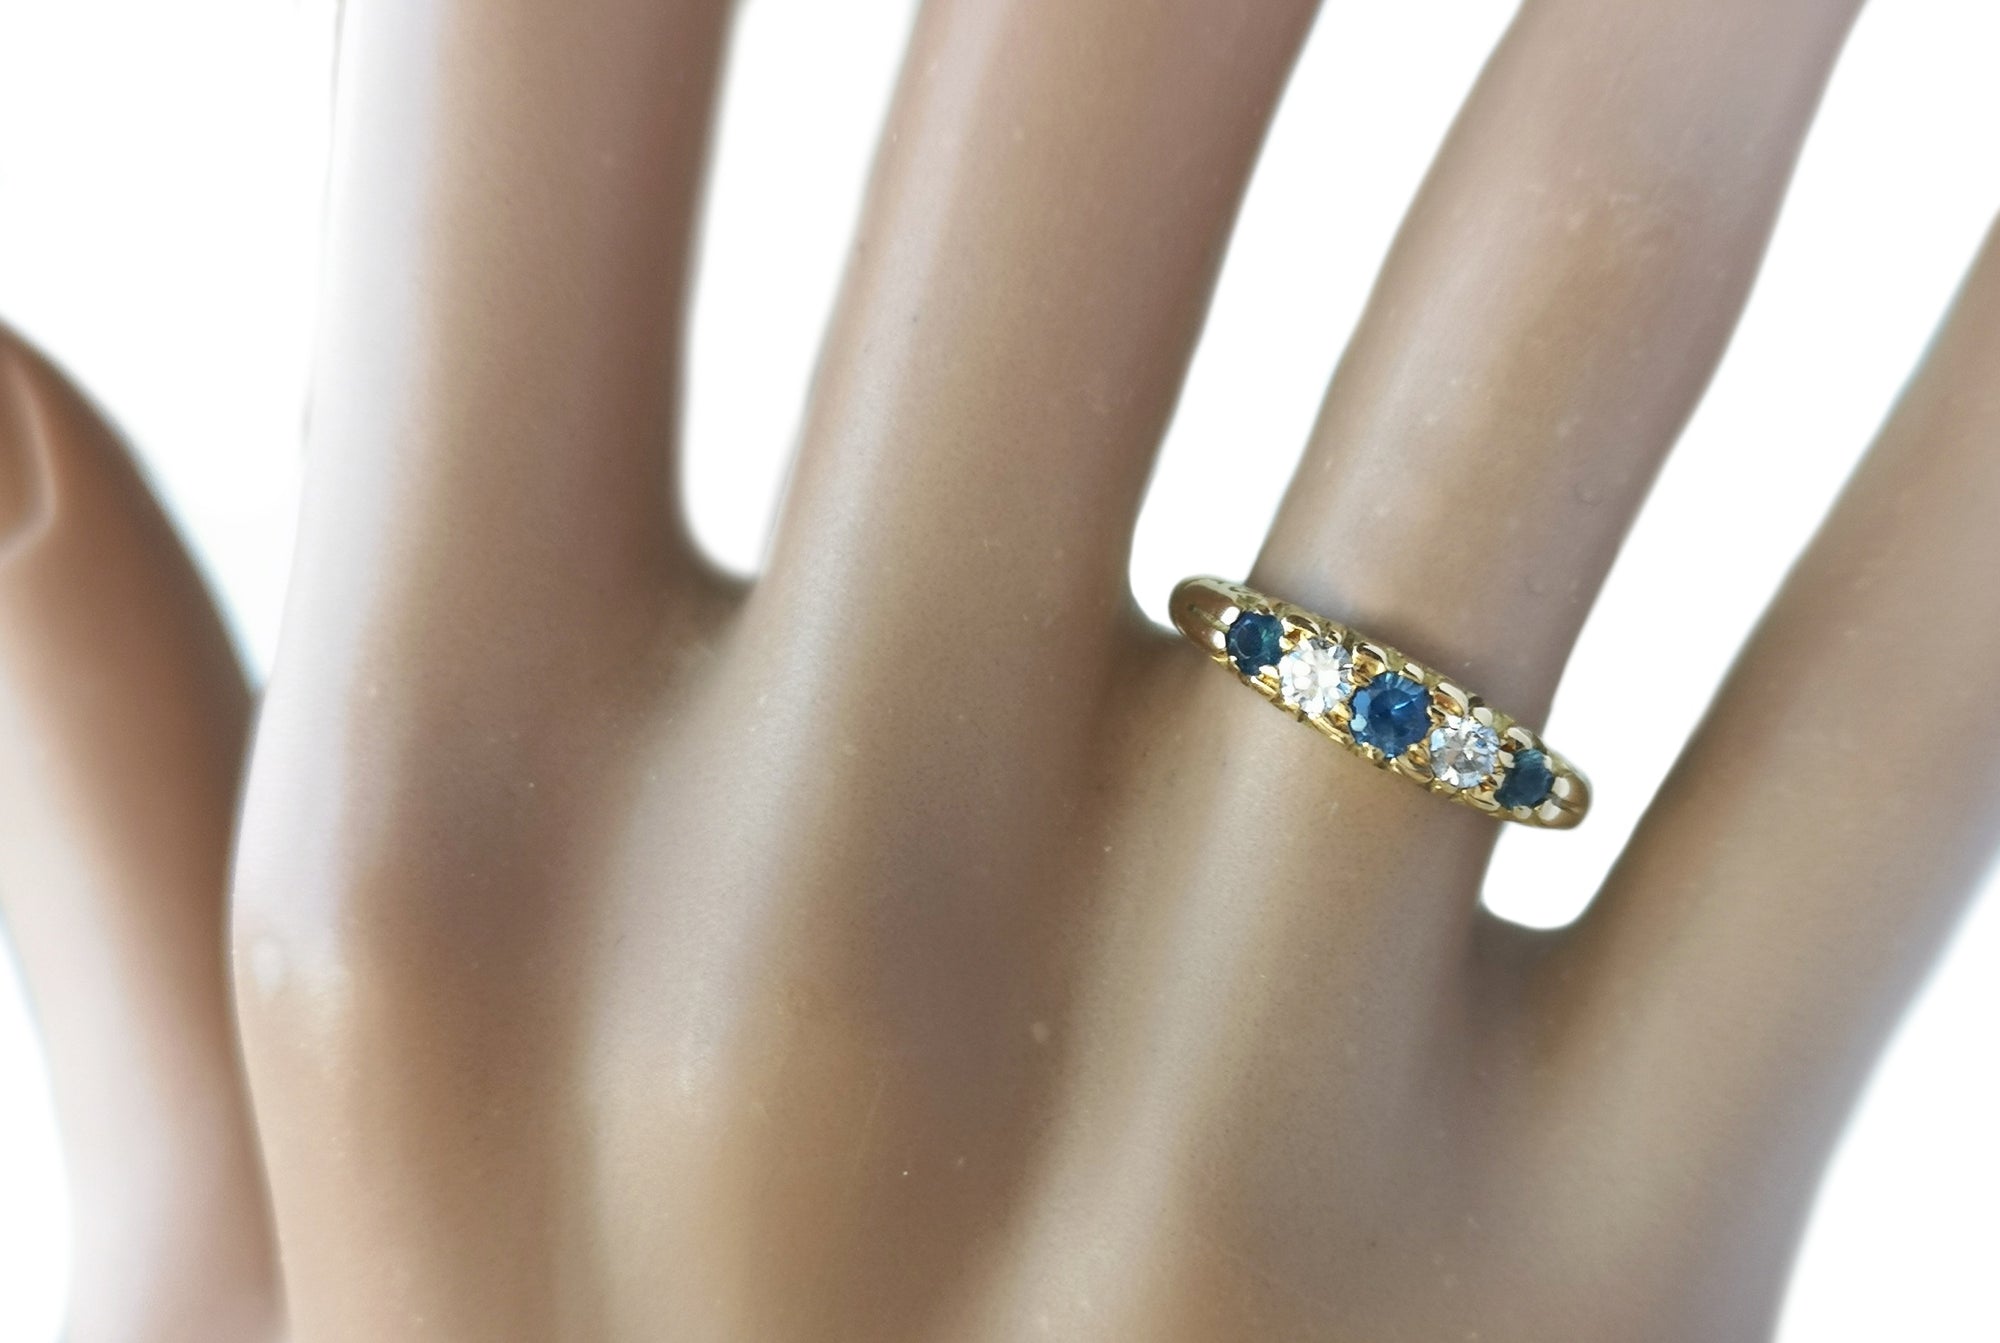 Antique Victorian 5 Stone Sapphire Diamond 18k Engagement Ring